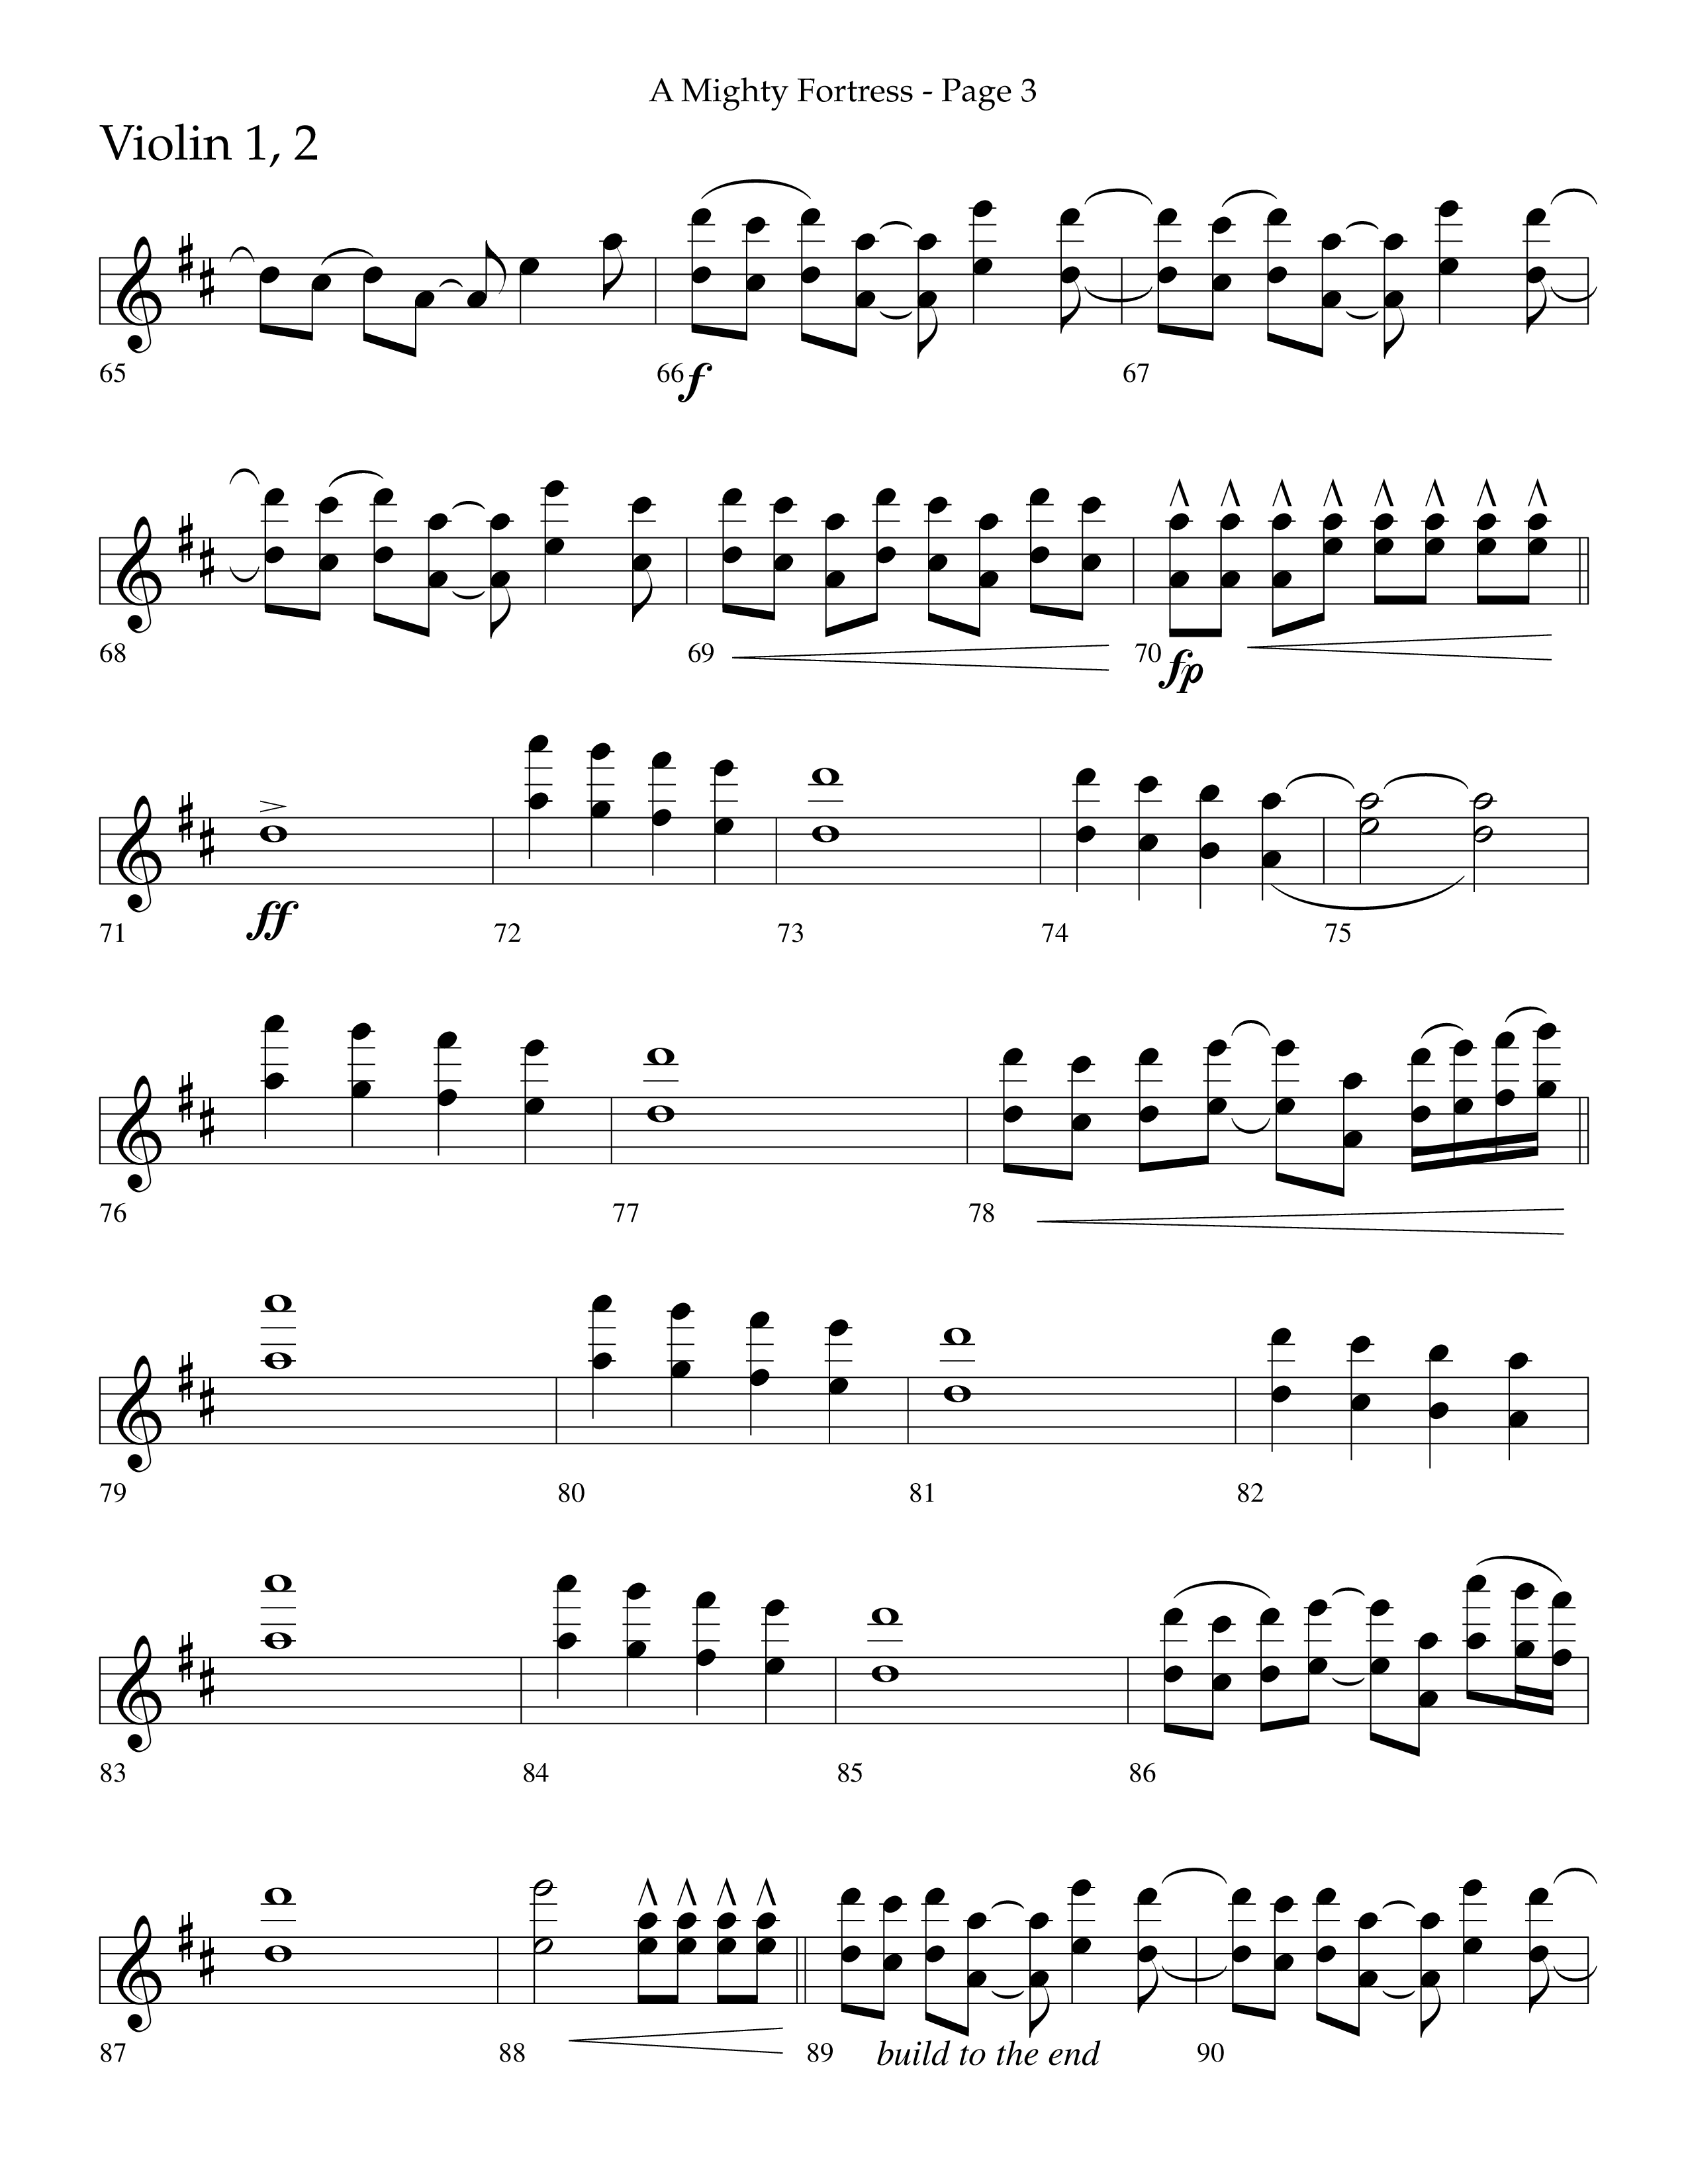 A Mighty Fortress (Choral Anthem SATB) Violin 1/2 (Lifeway Choral / Arr. Cliff Duren)